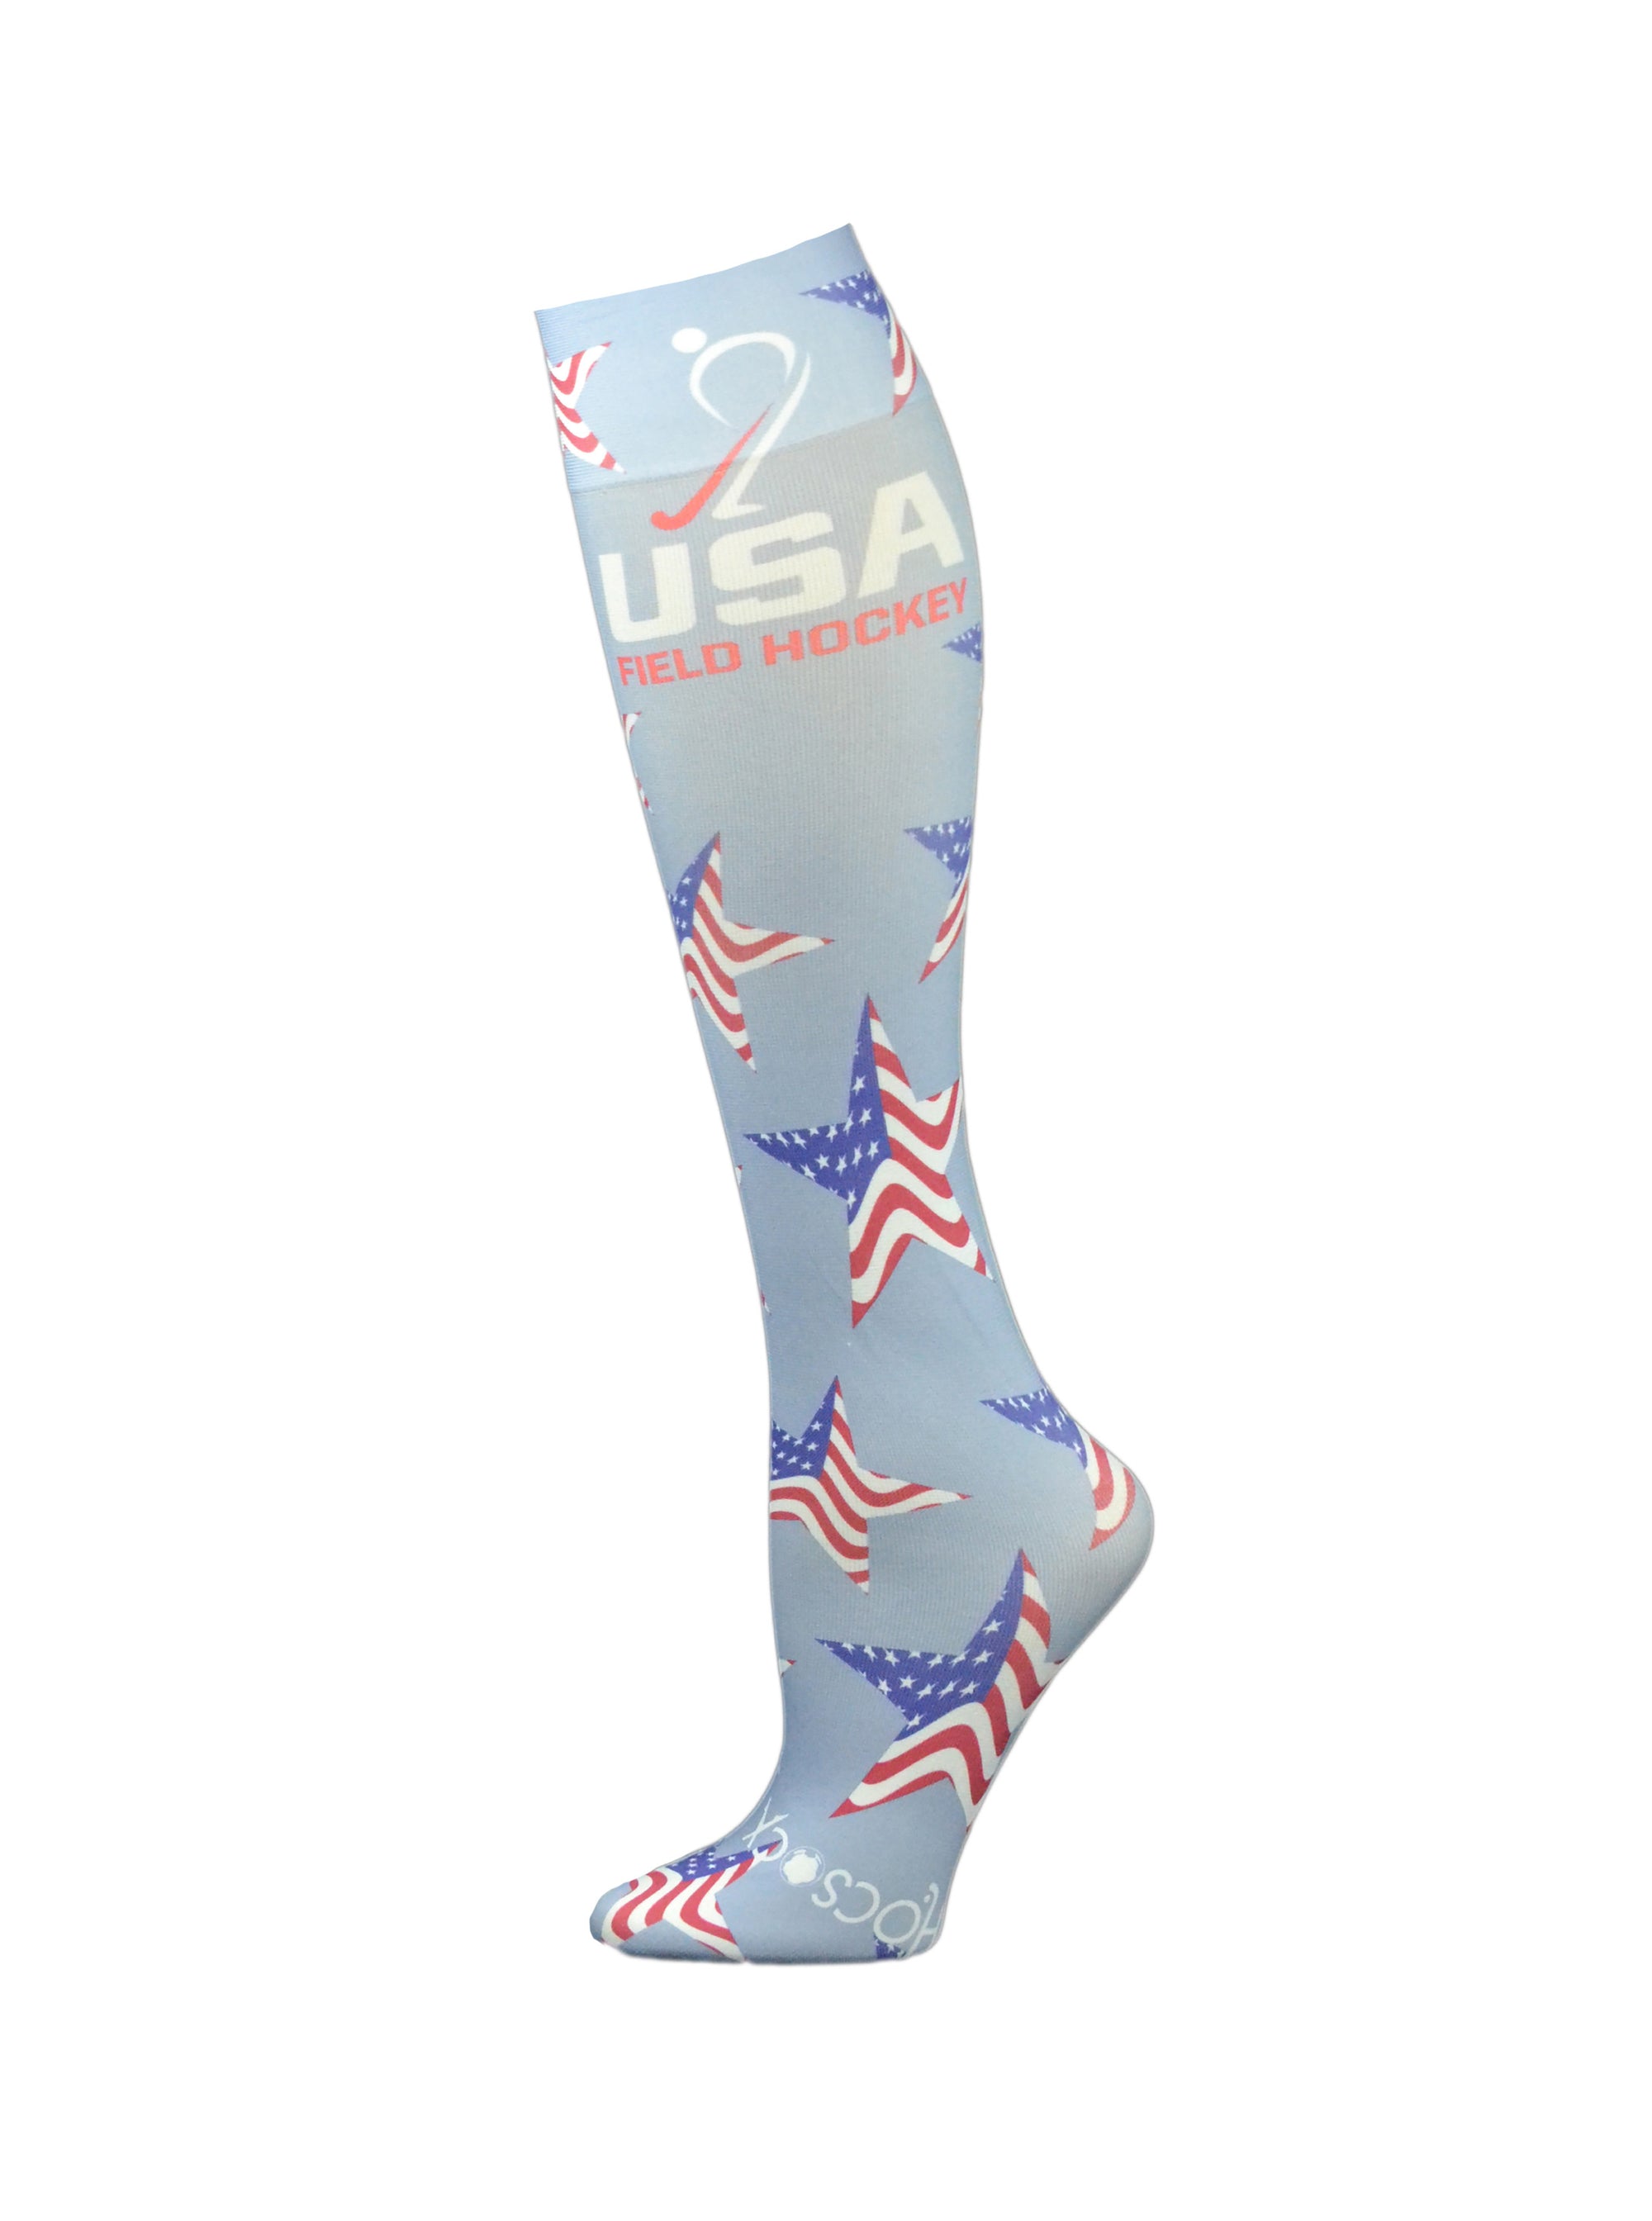 USA FH 2020 Socks